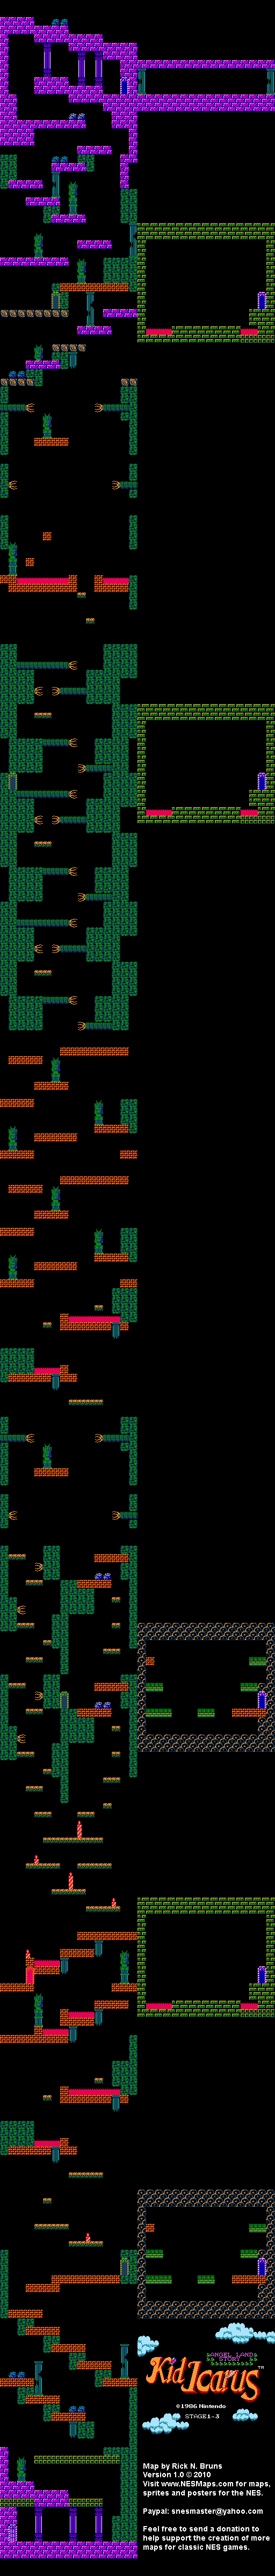 Kid Icarus - Stage 1-3 - NES Map BG